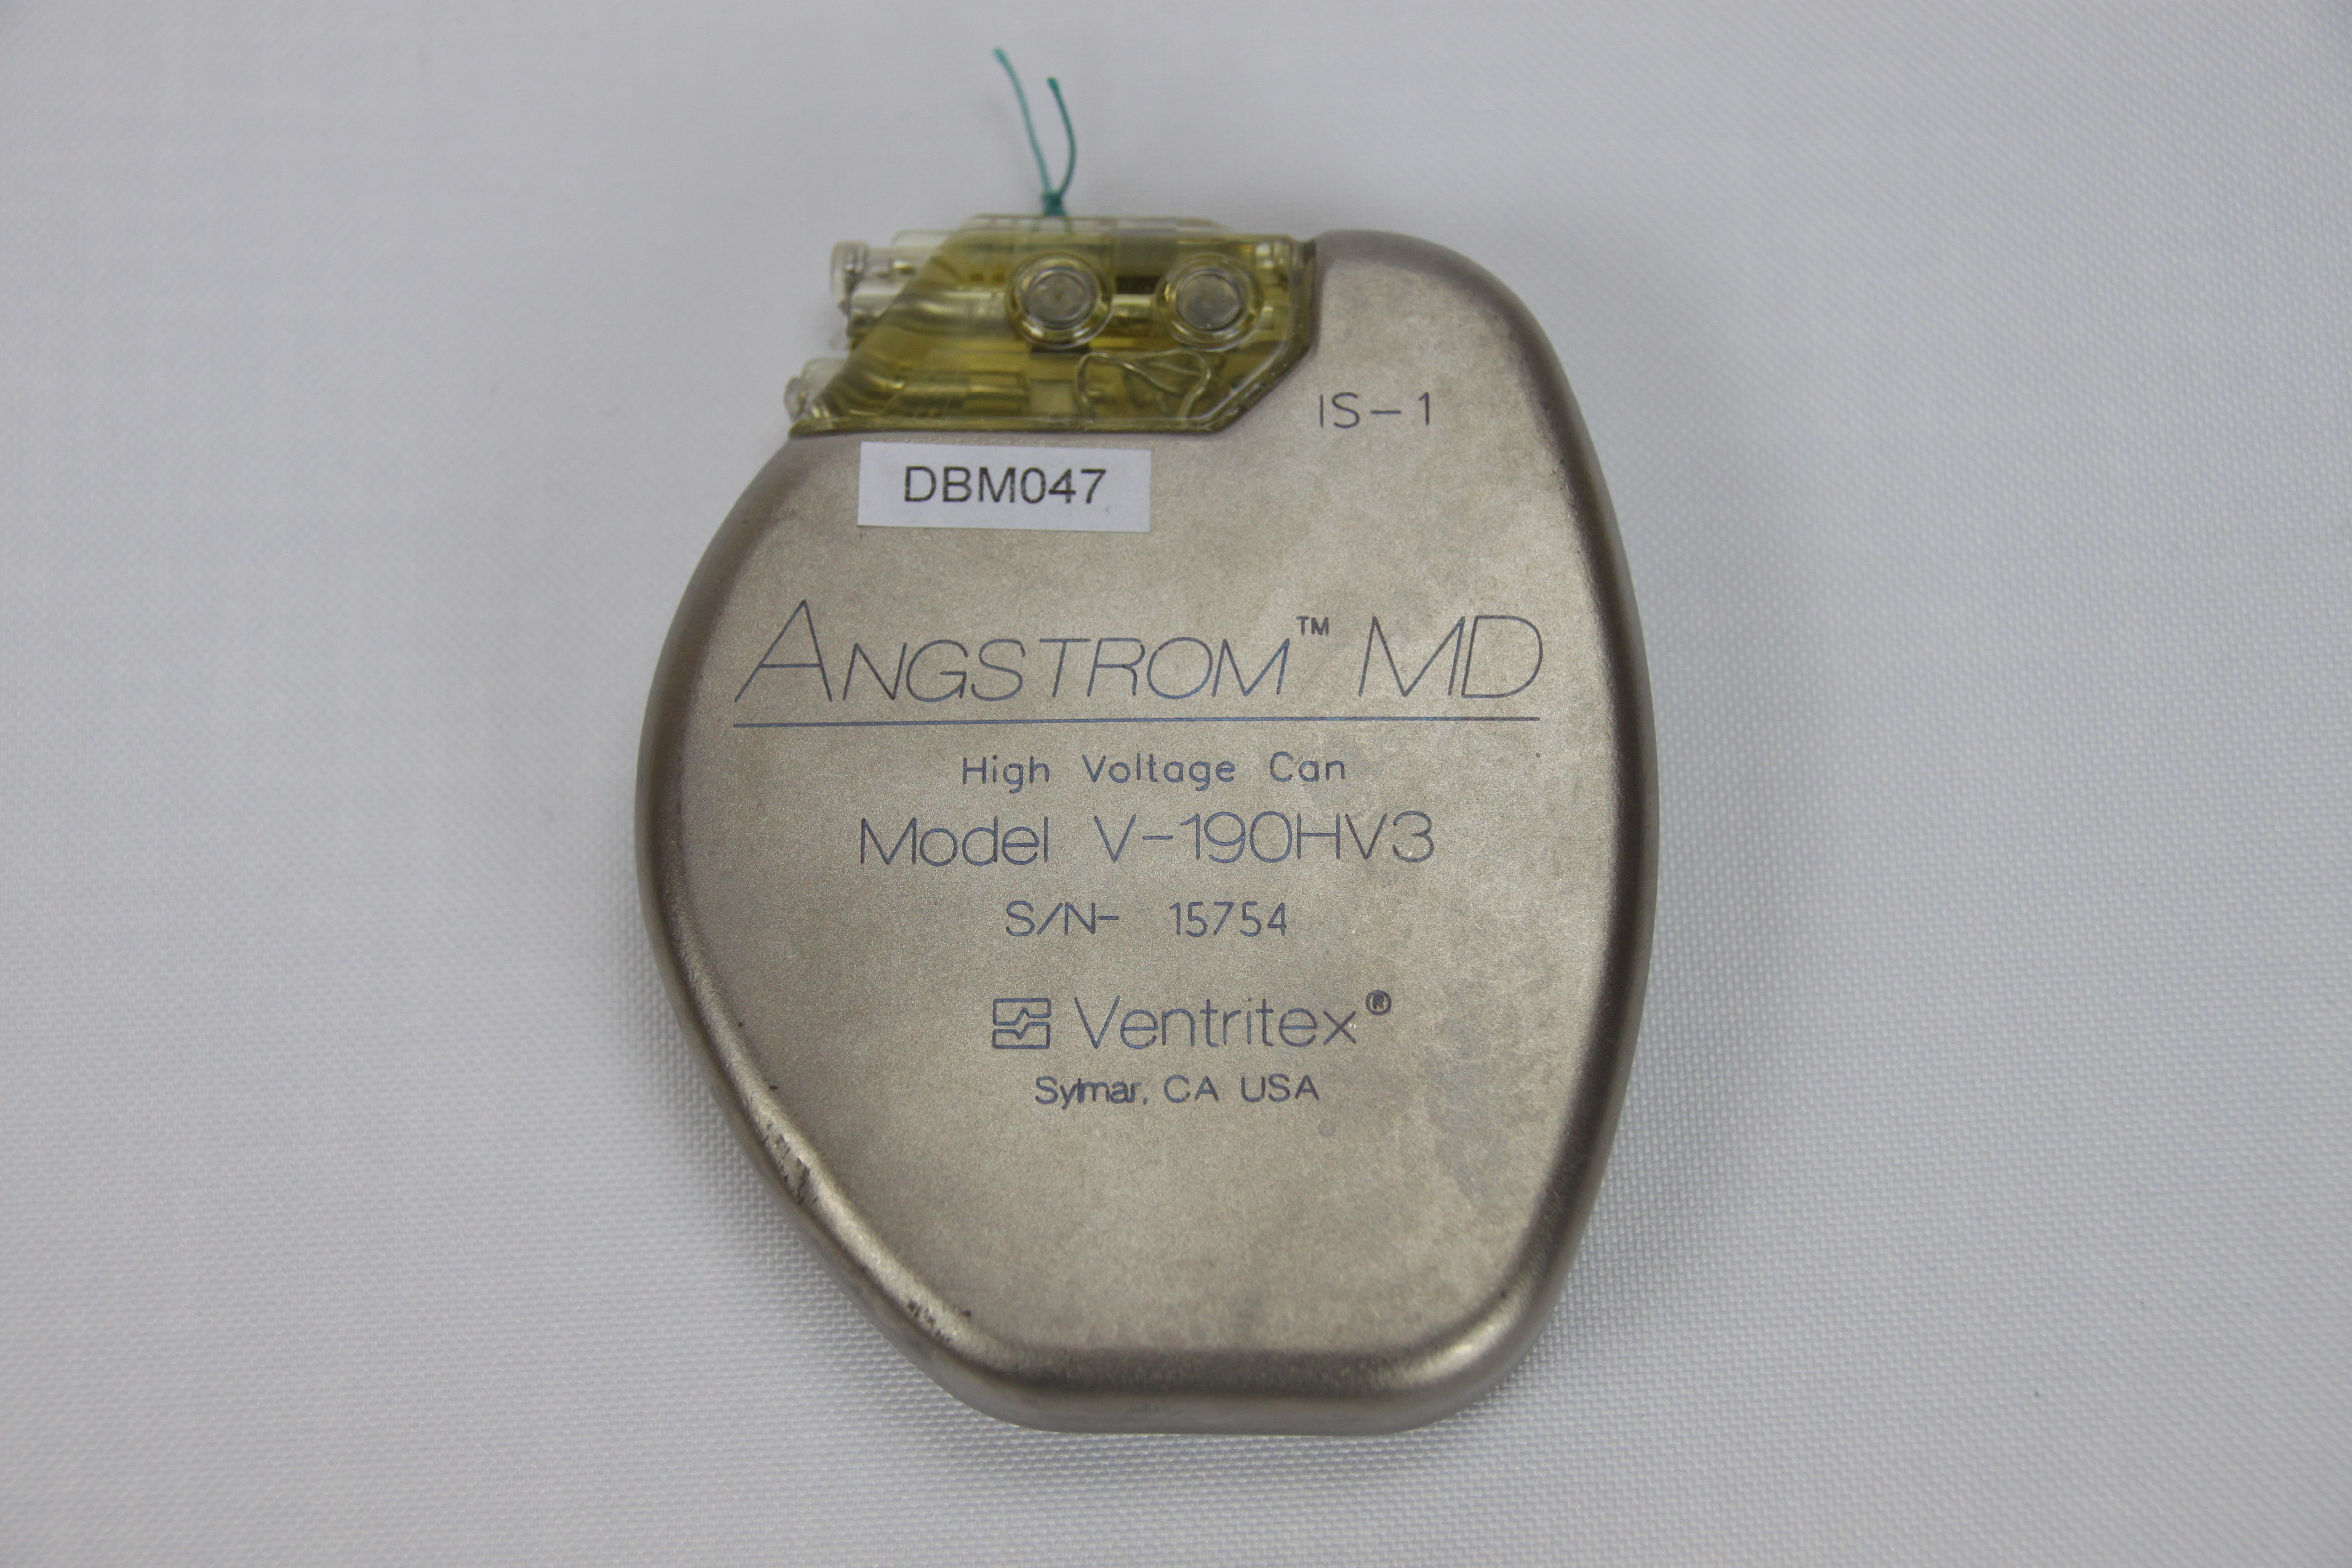 Herzschrittmacher-Implantat Ventritex Angstrom MD V-190HV3, Vorderseite (Krankenhausmuseum Bielefeld e.V. CC BY-NC-SA)